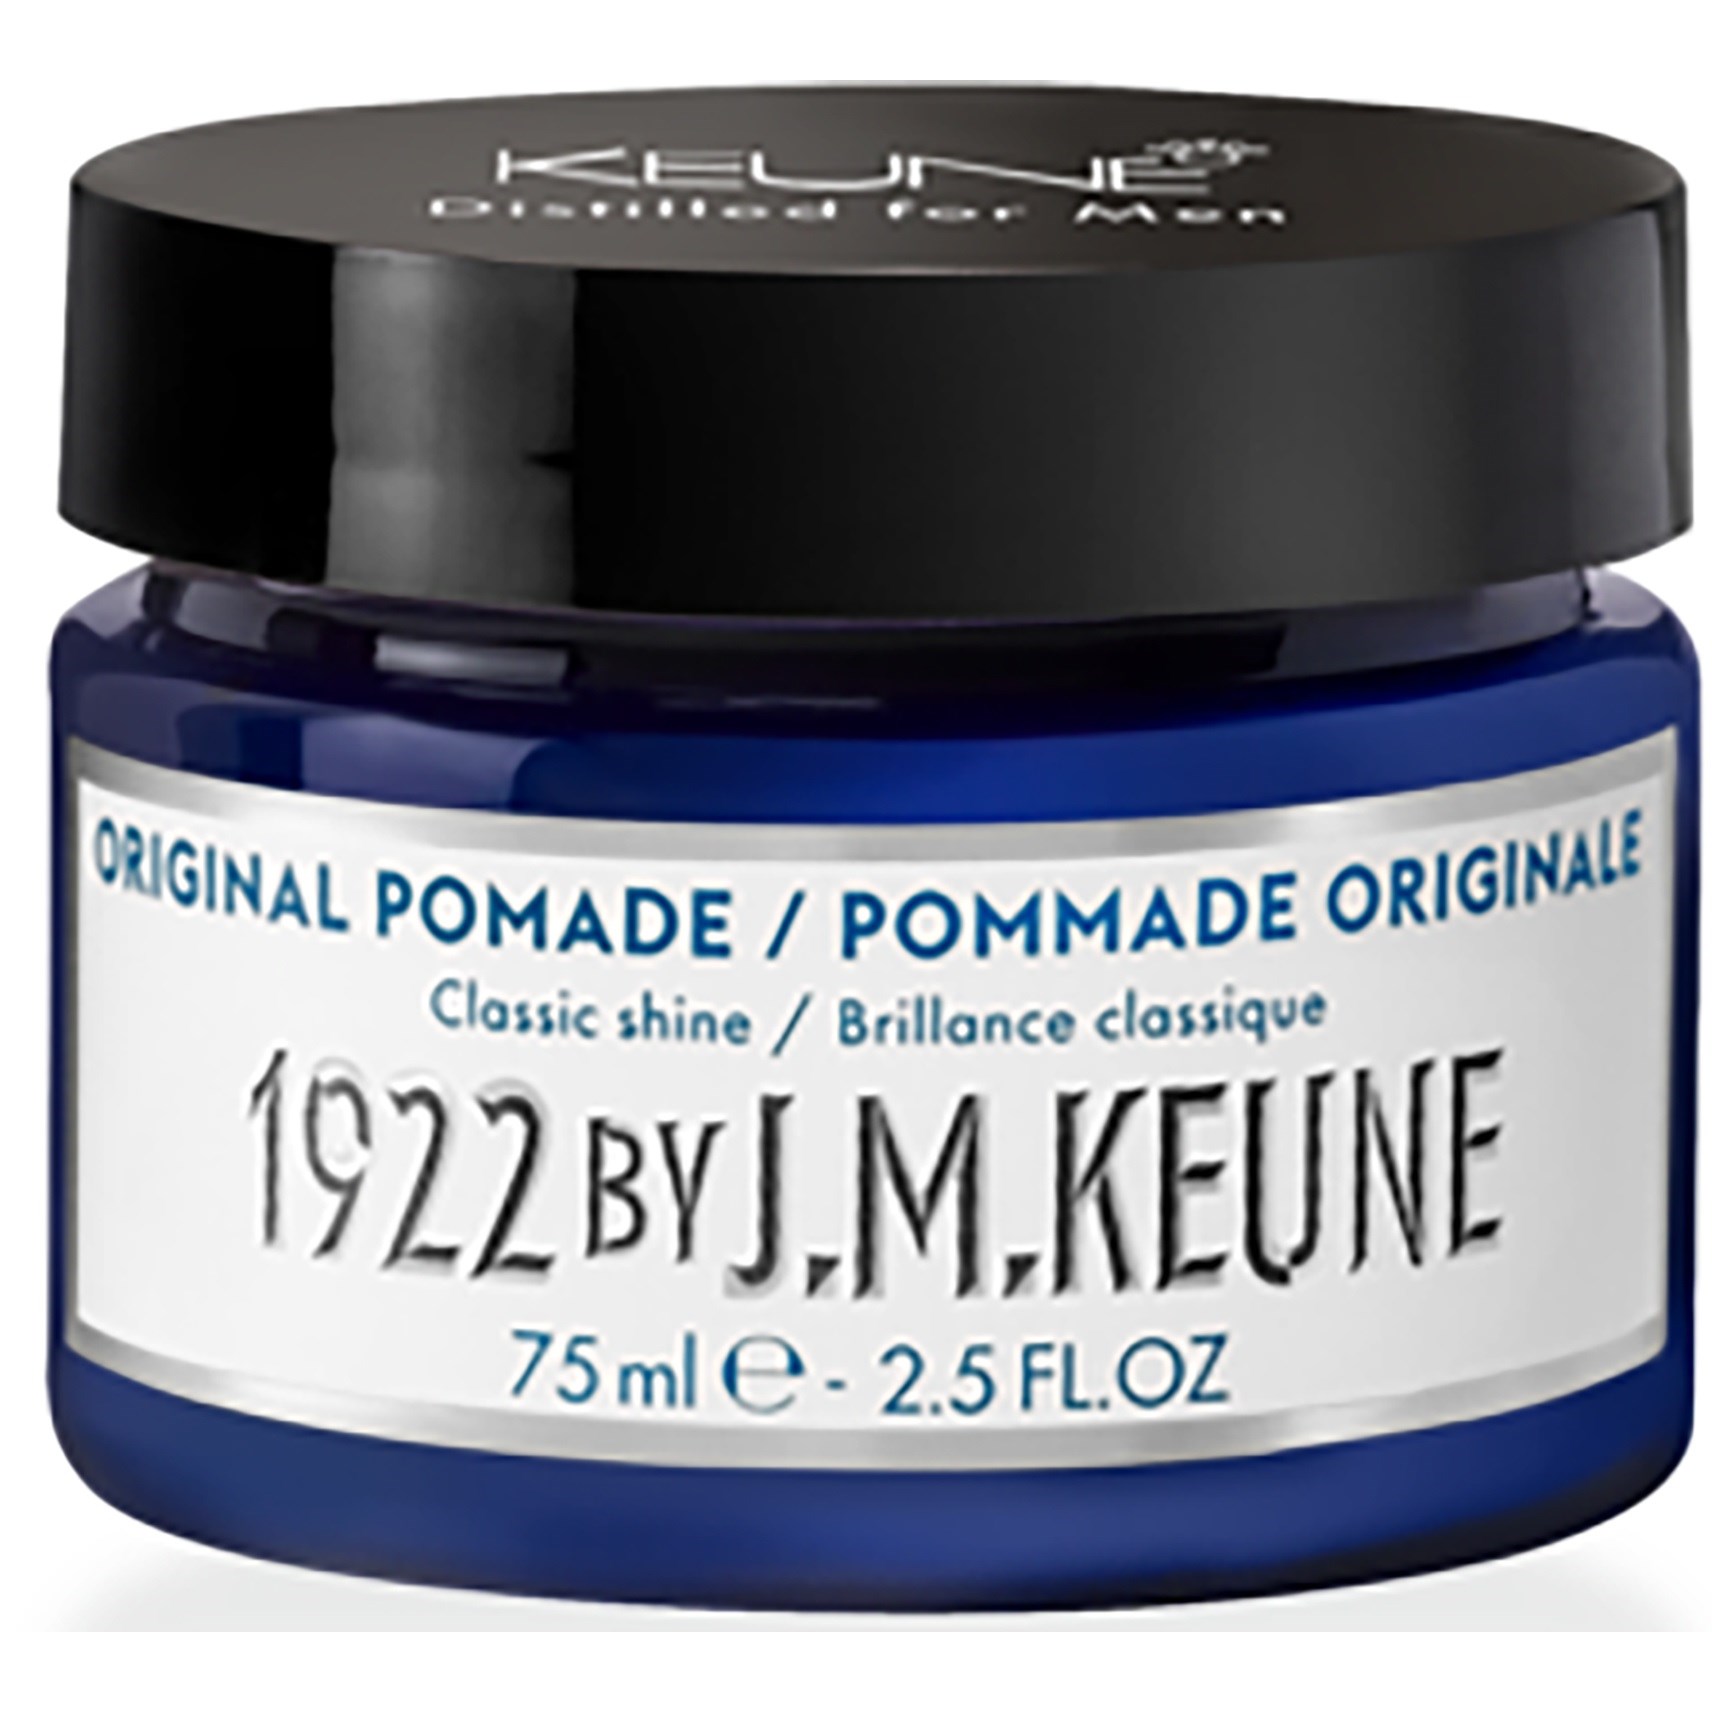 Keune 1922 by J.M.Keune Original Pomade 75 ml